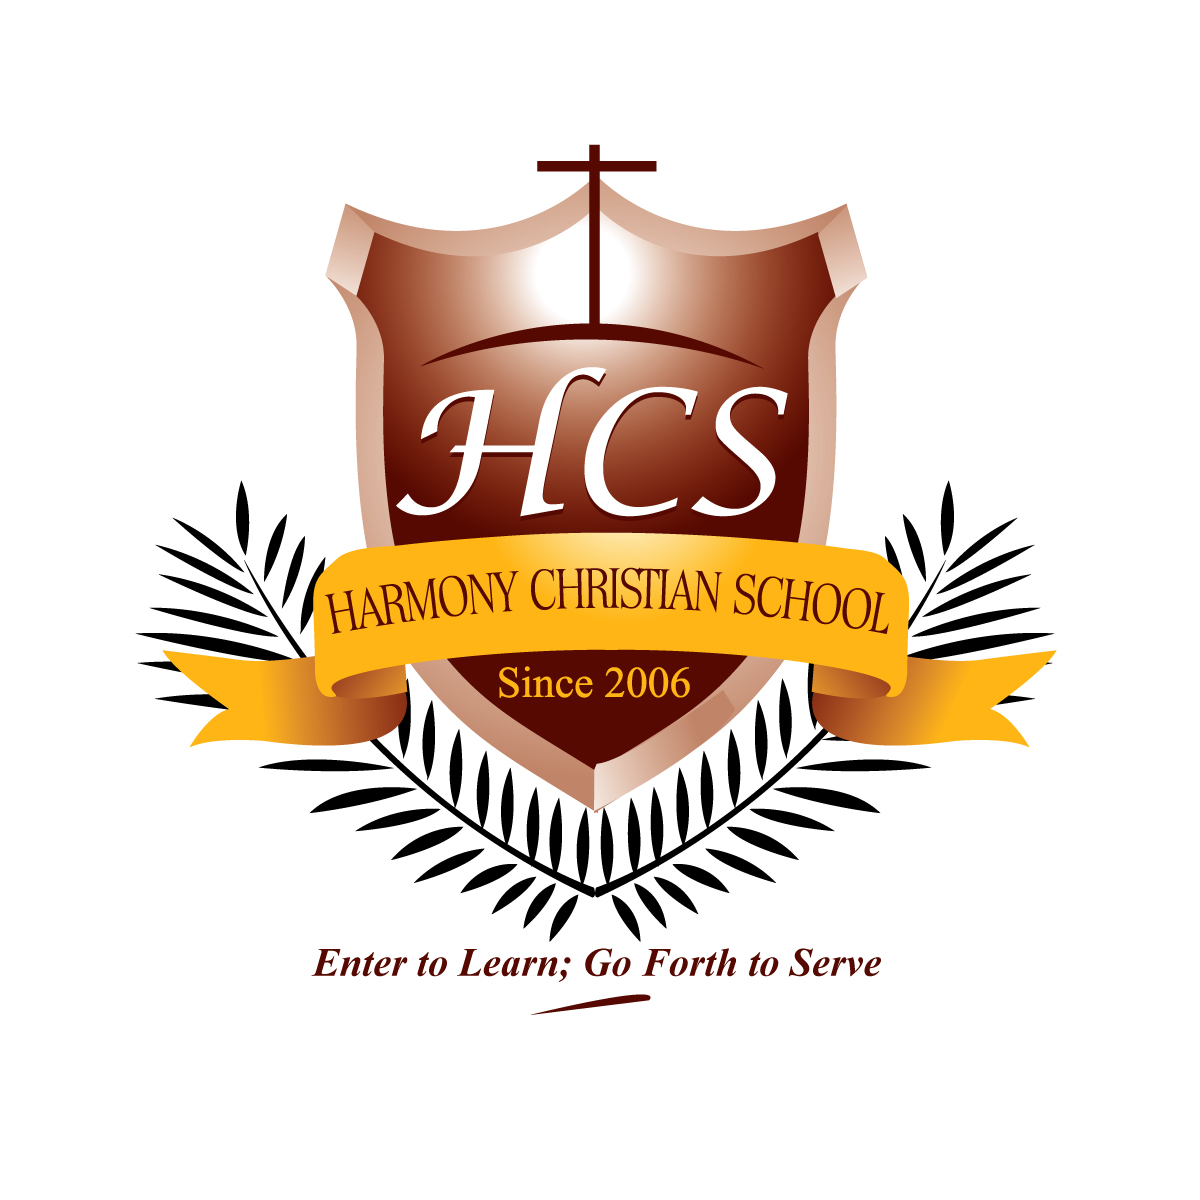 HARMONY CHRISTIAN SCHOOL